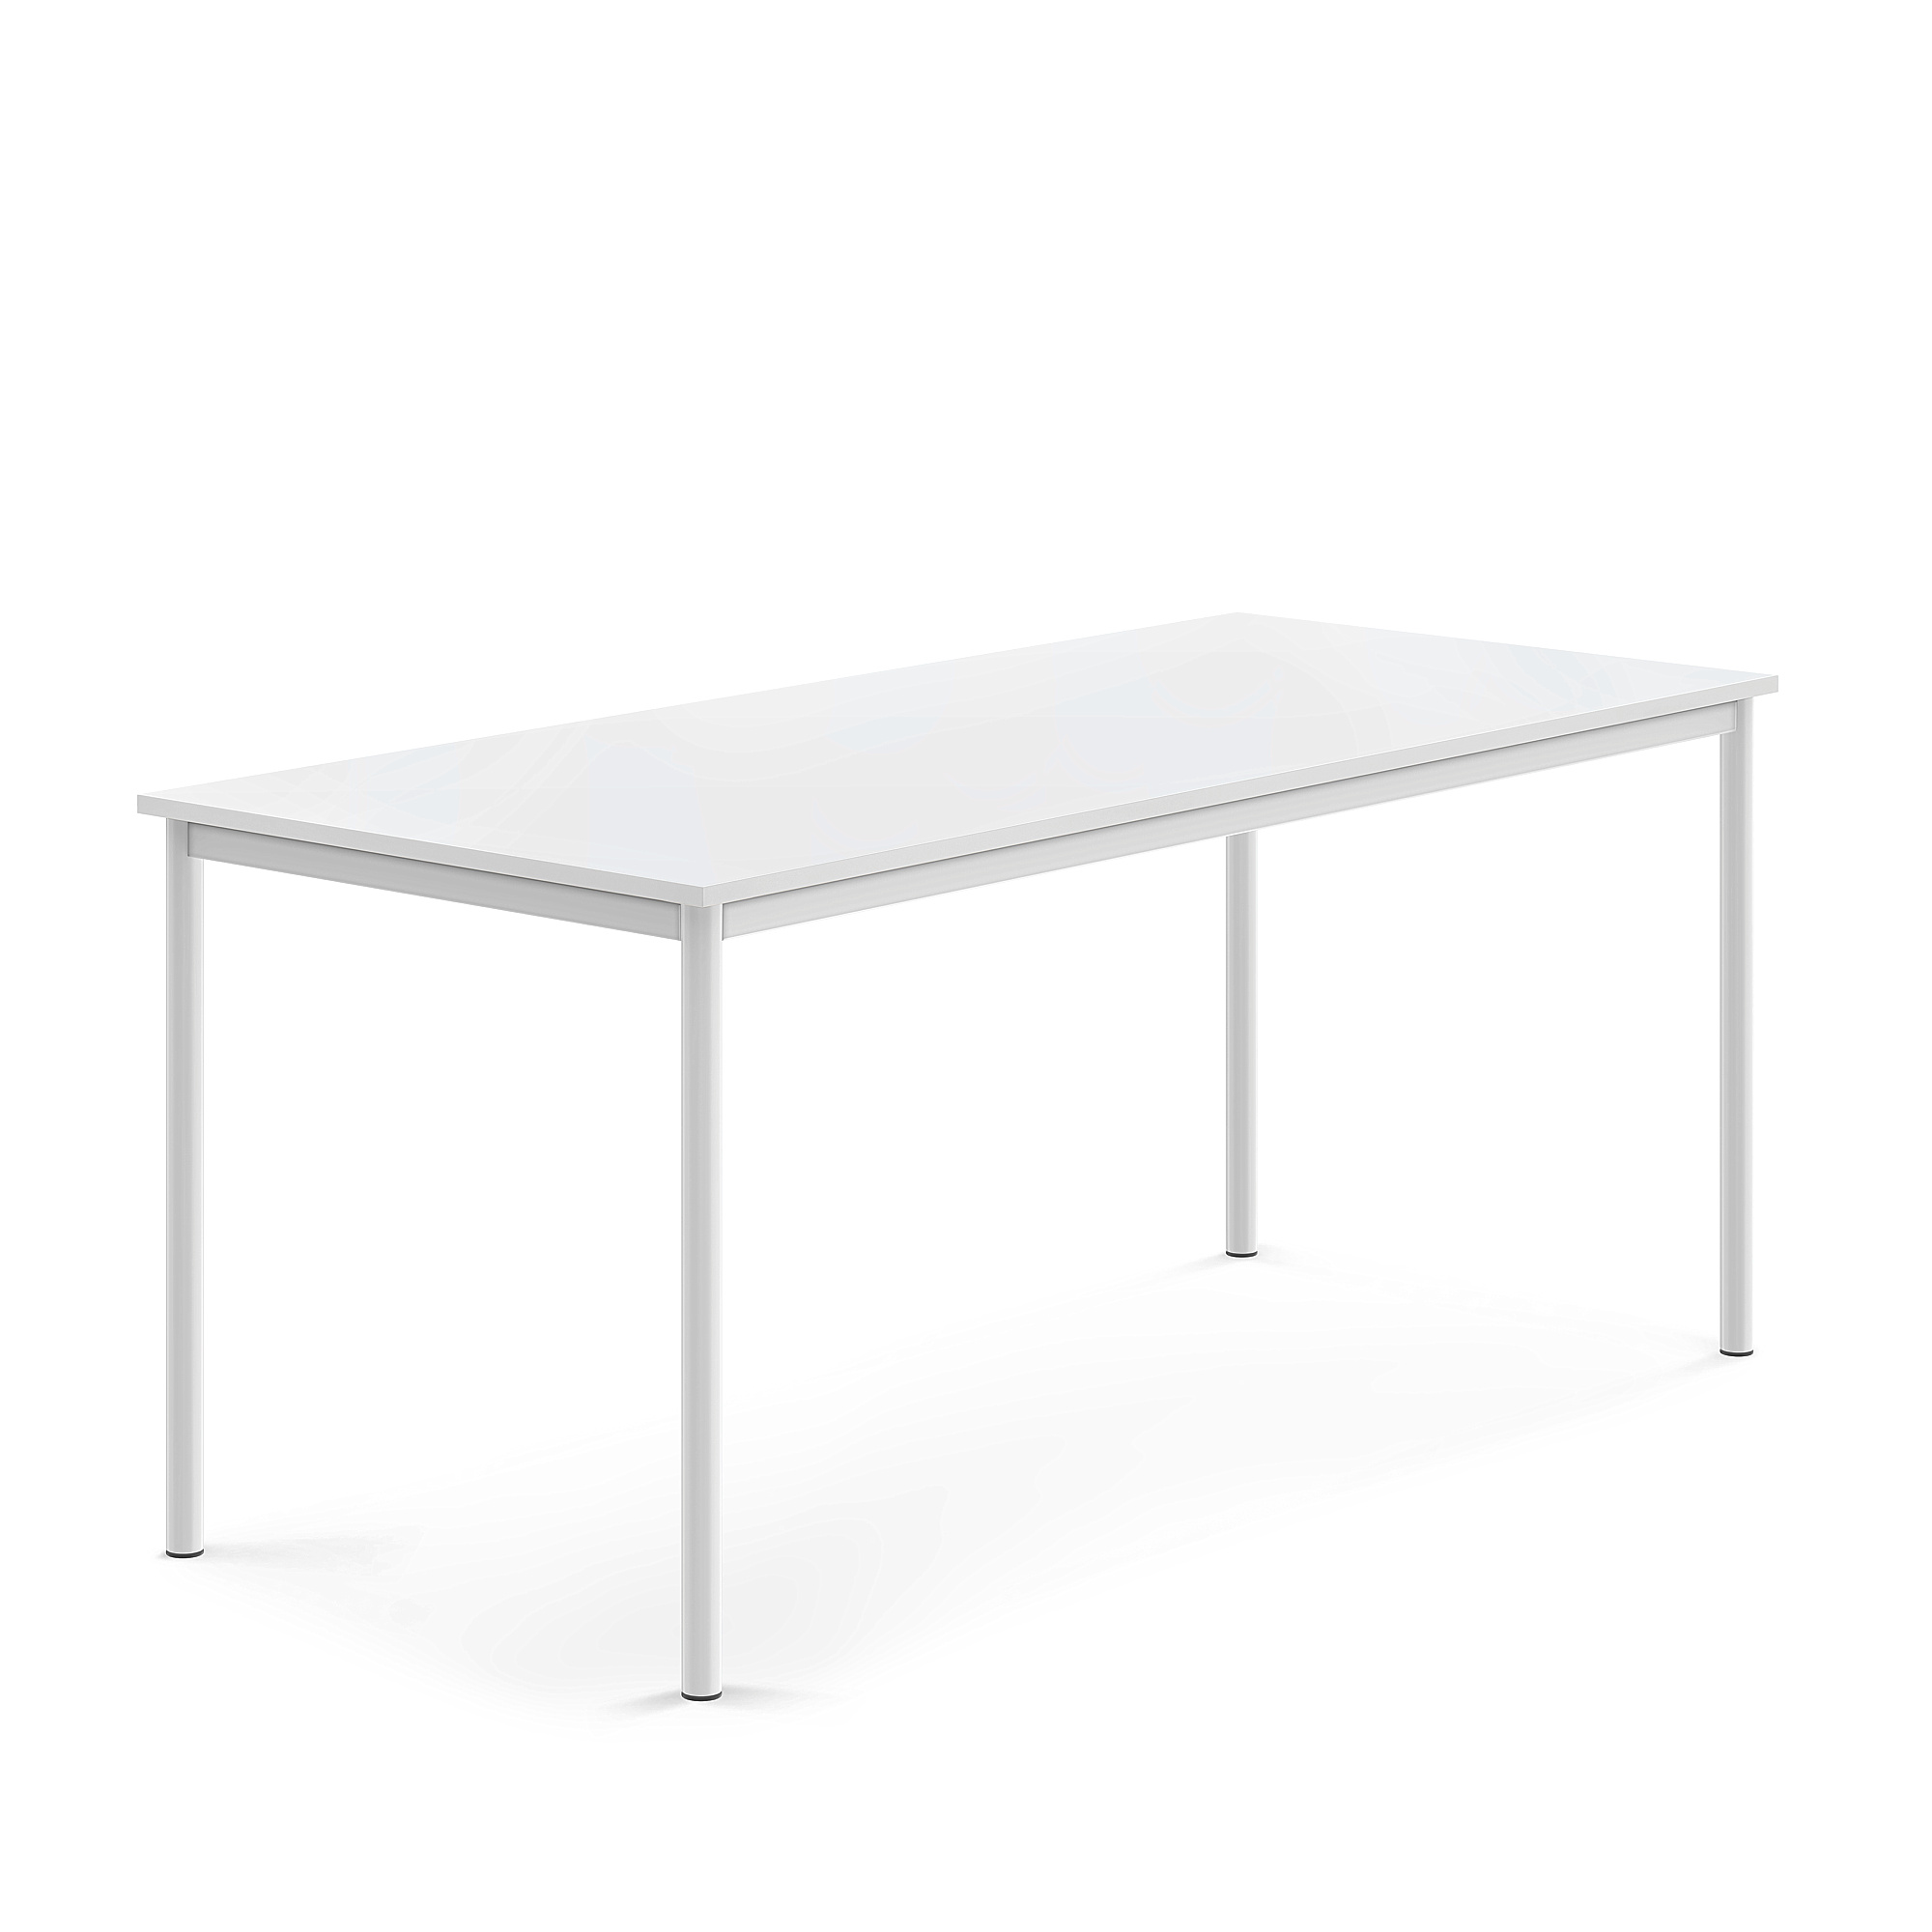 Stůl SONITUS, 1800x800x760 mm, bílé nohy, HPL deska tlumící hluk, bílá